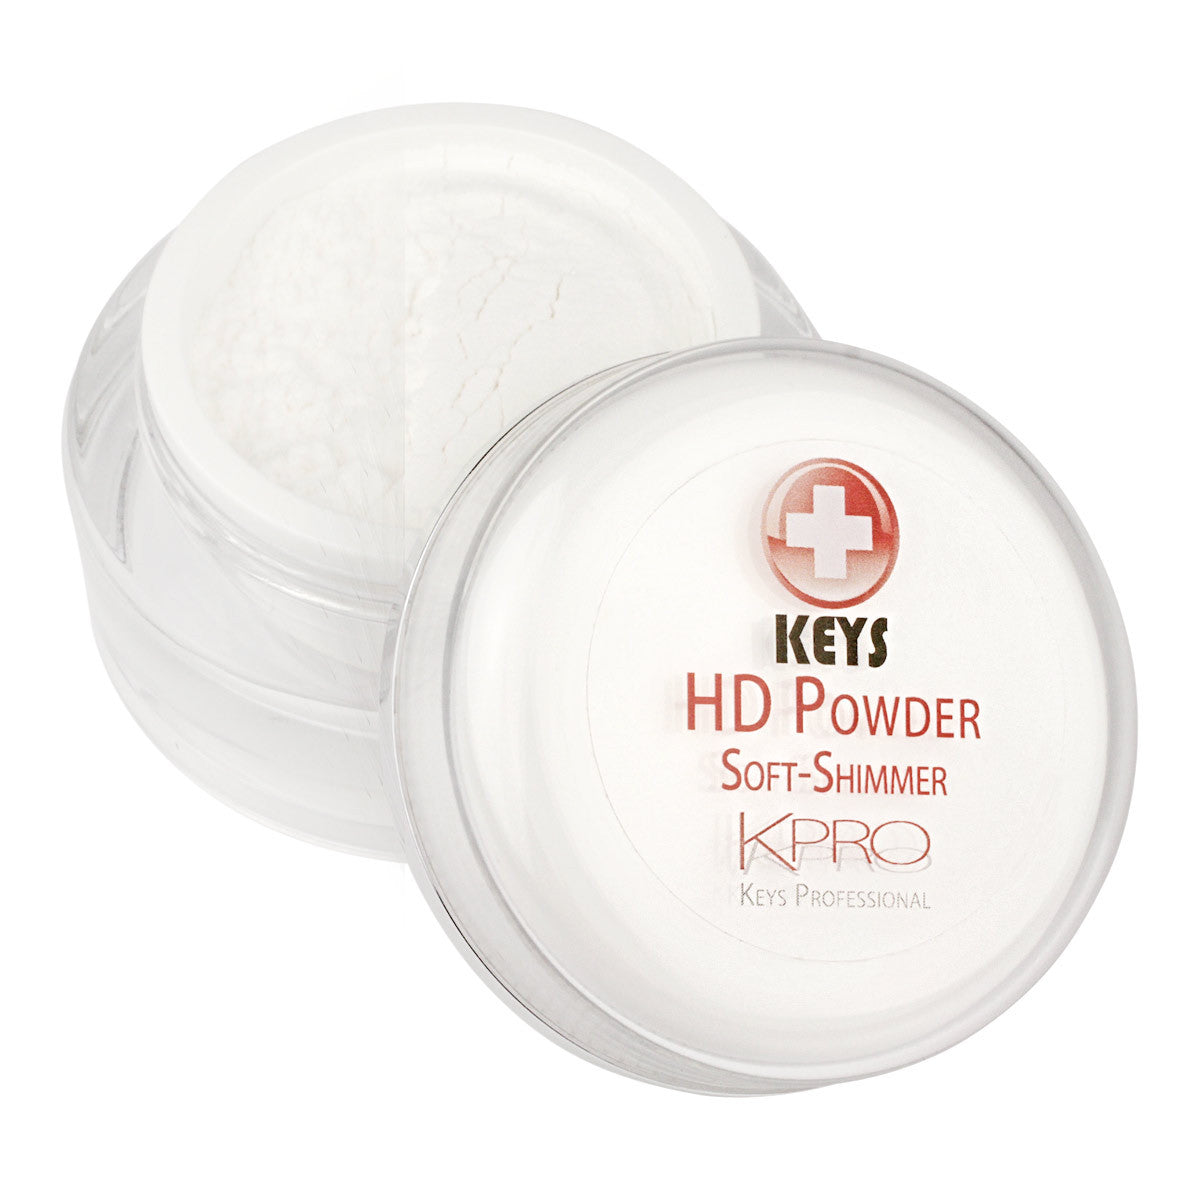 Primary image of KPRO HD Powder